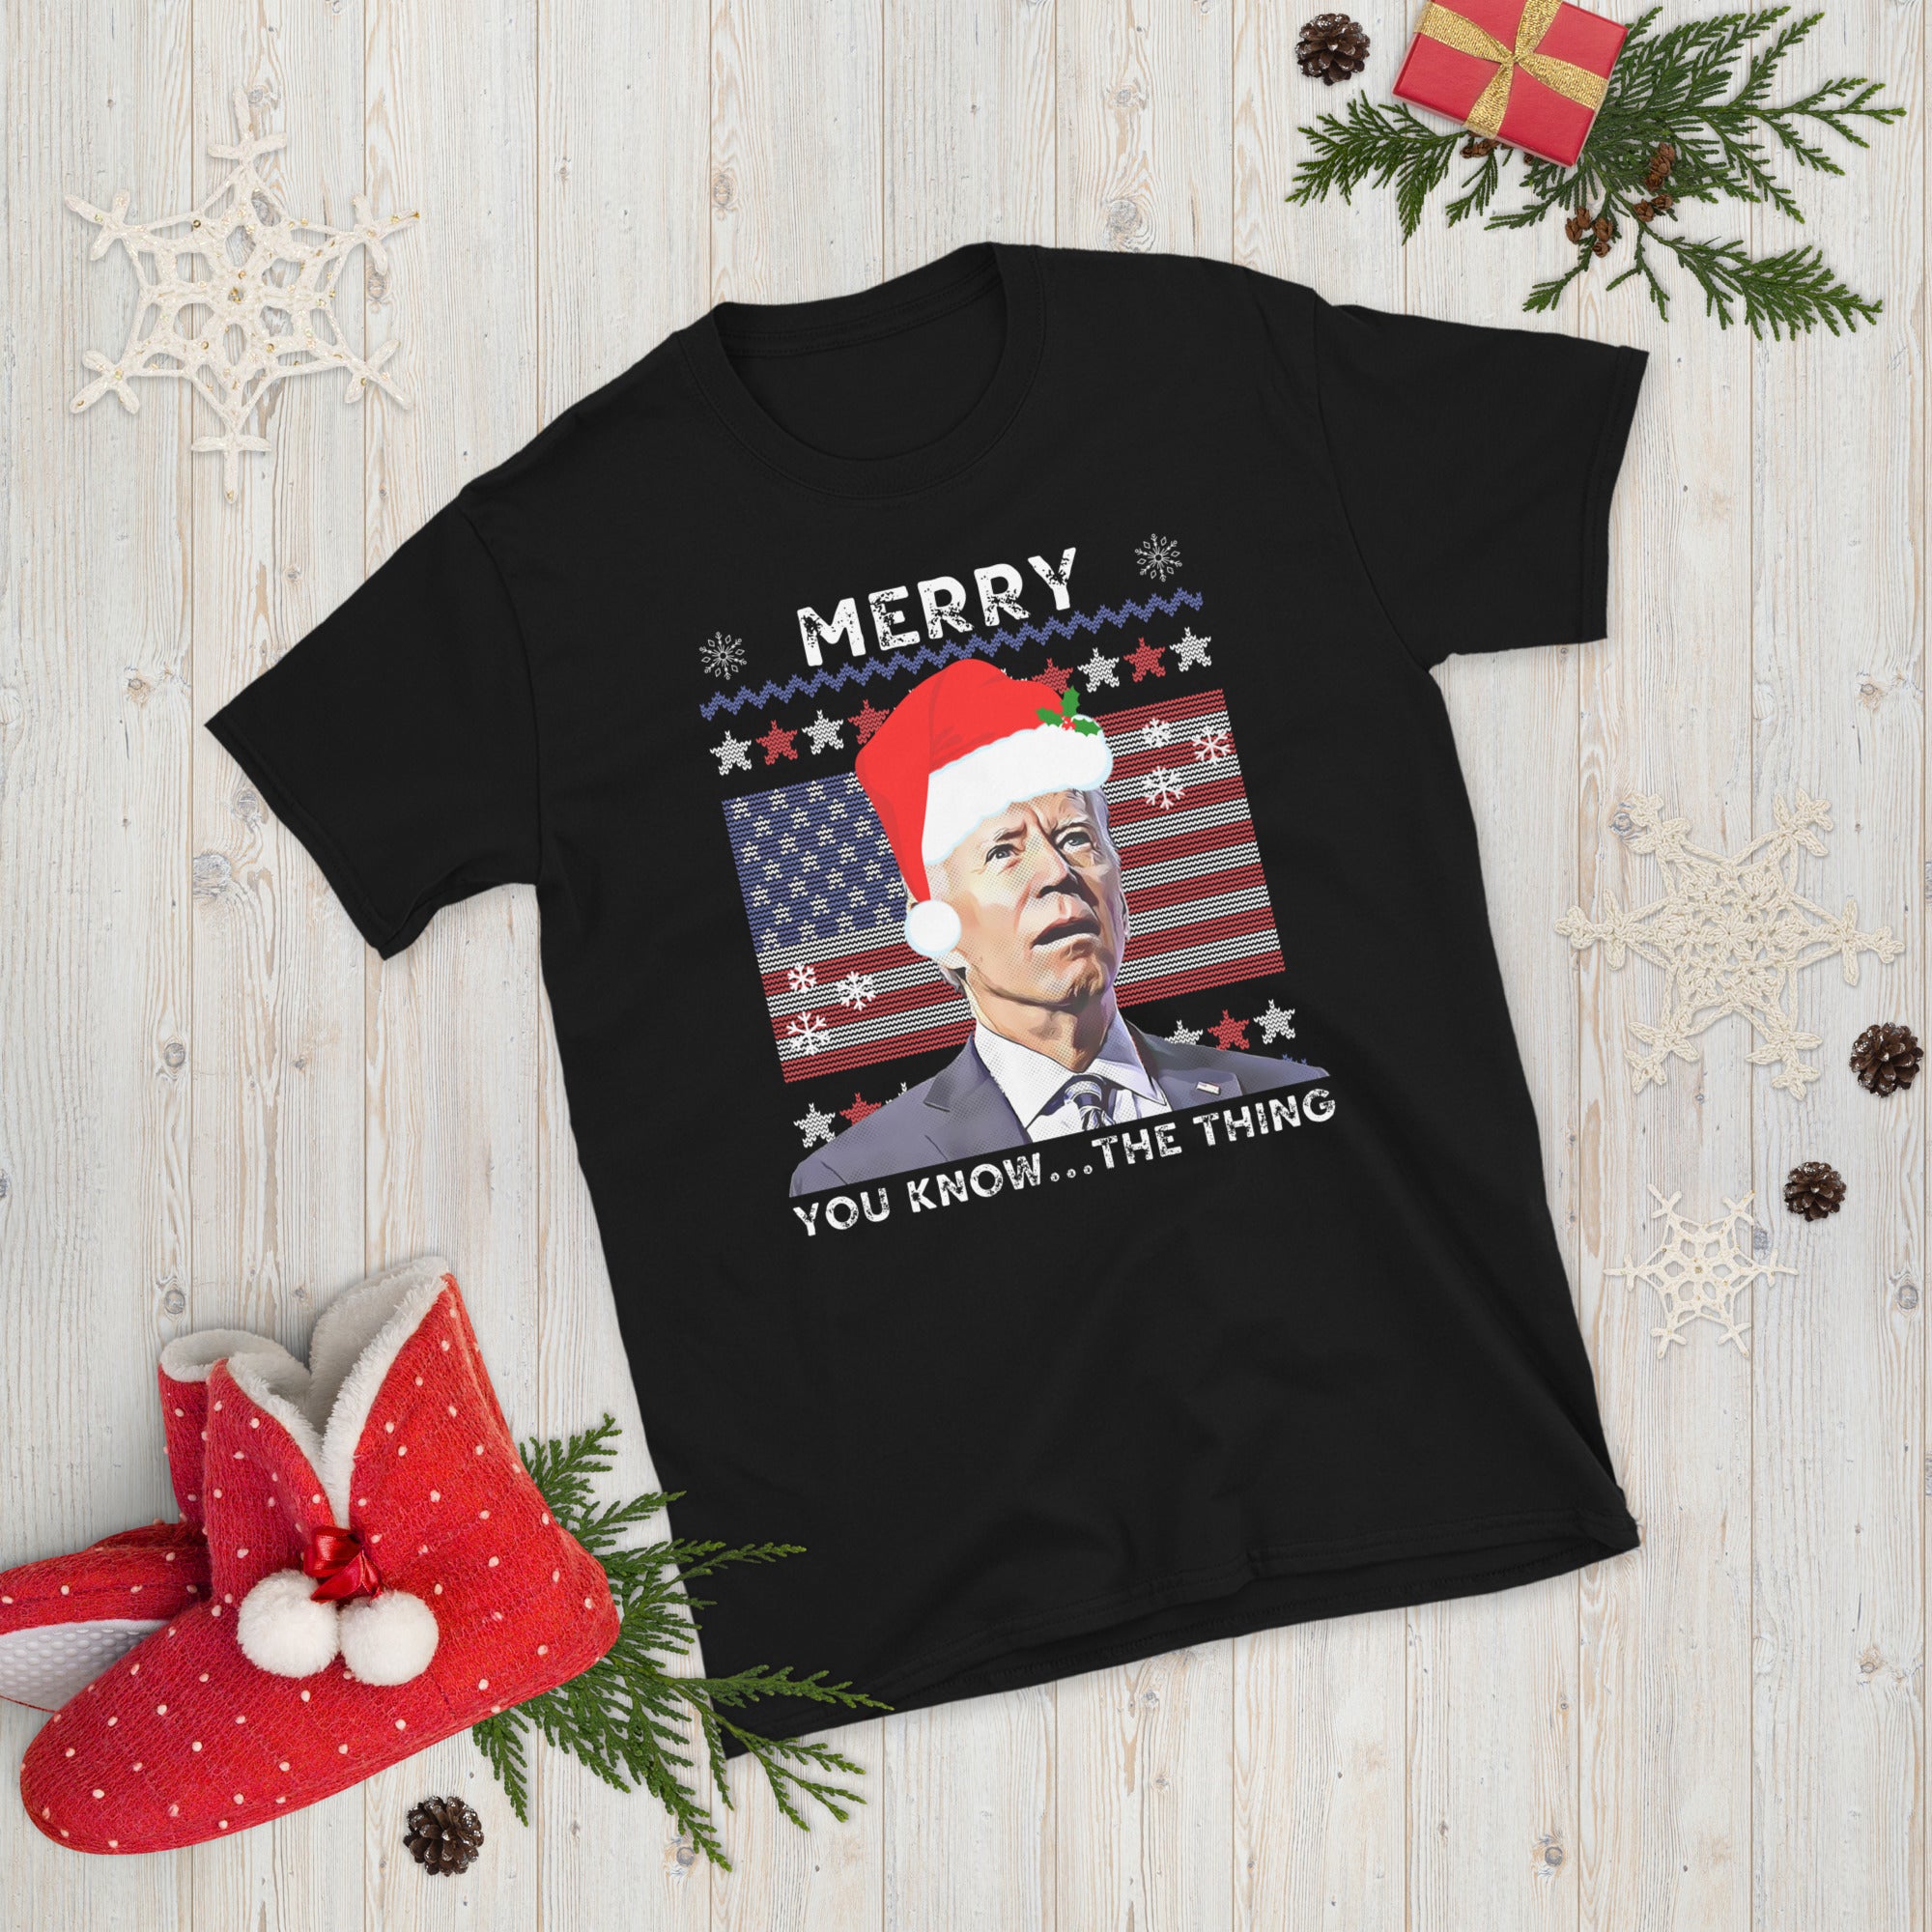 Merry You Know The Thing, Christmas Biden Shirt, Funny Confused Joe Biden Xmas Tshirt, Santa Joe Biden T Shirt, Republican Gifts, FJB Shirt